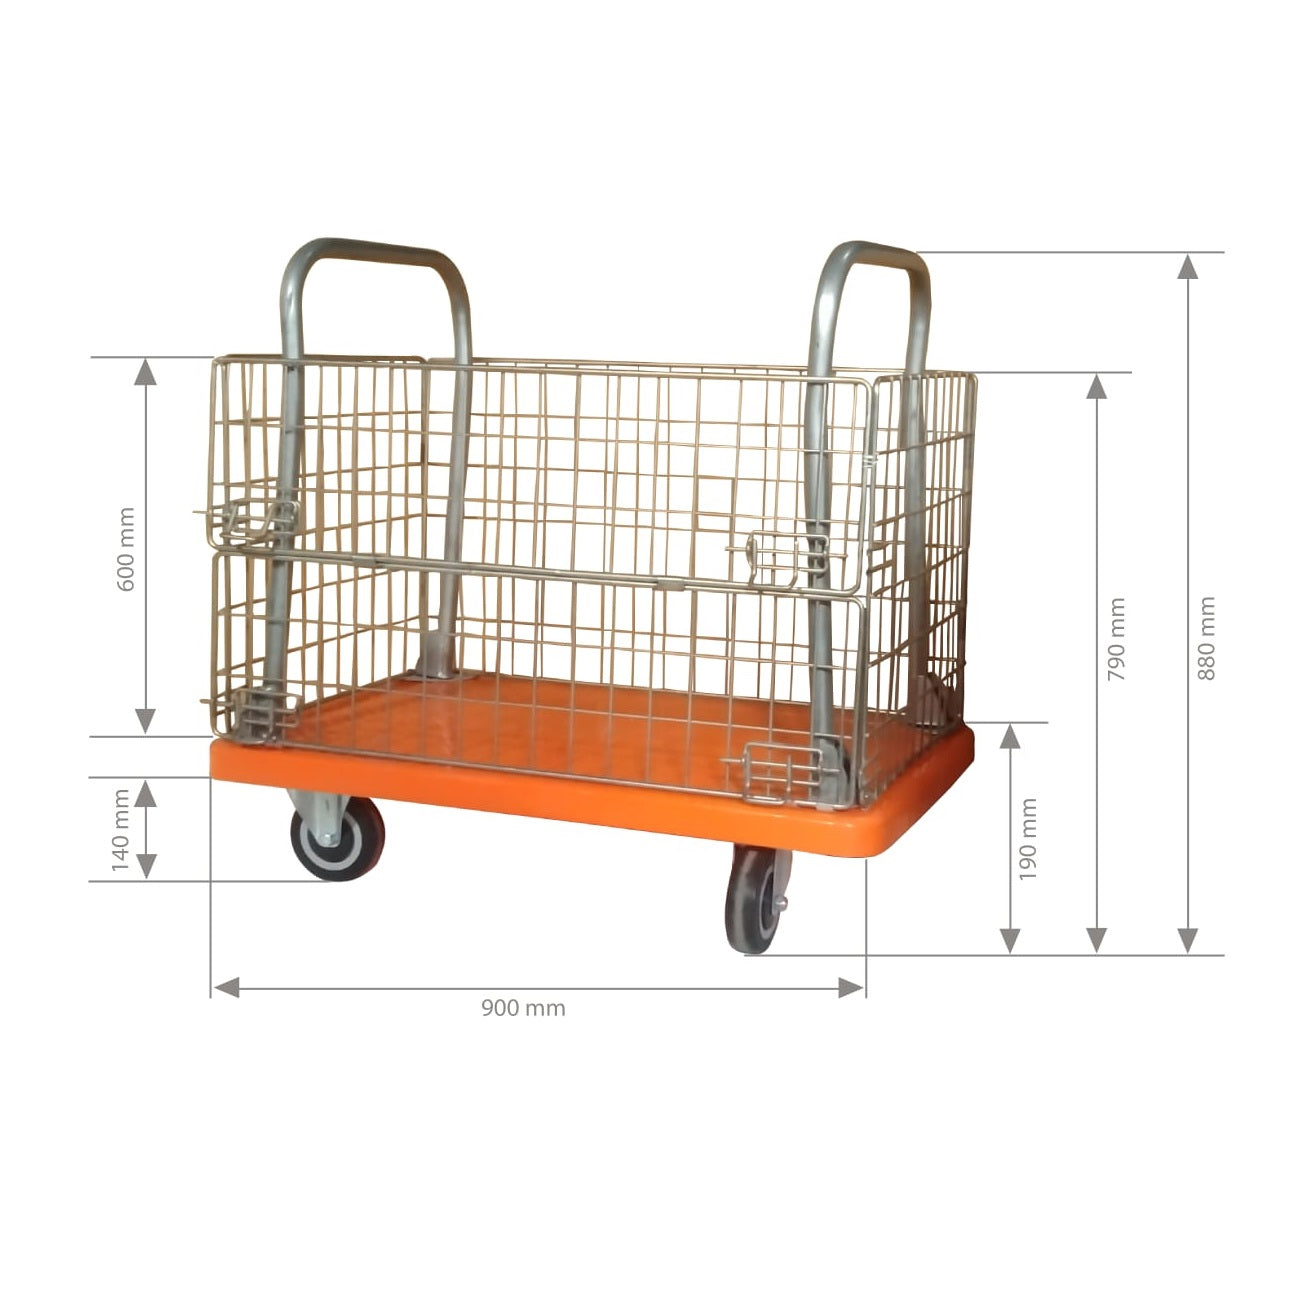 SRP Basket Trolley with PP Wheels Capacity 300Kg